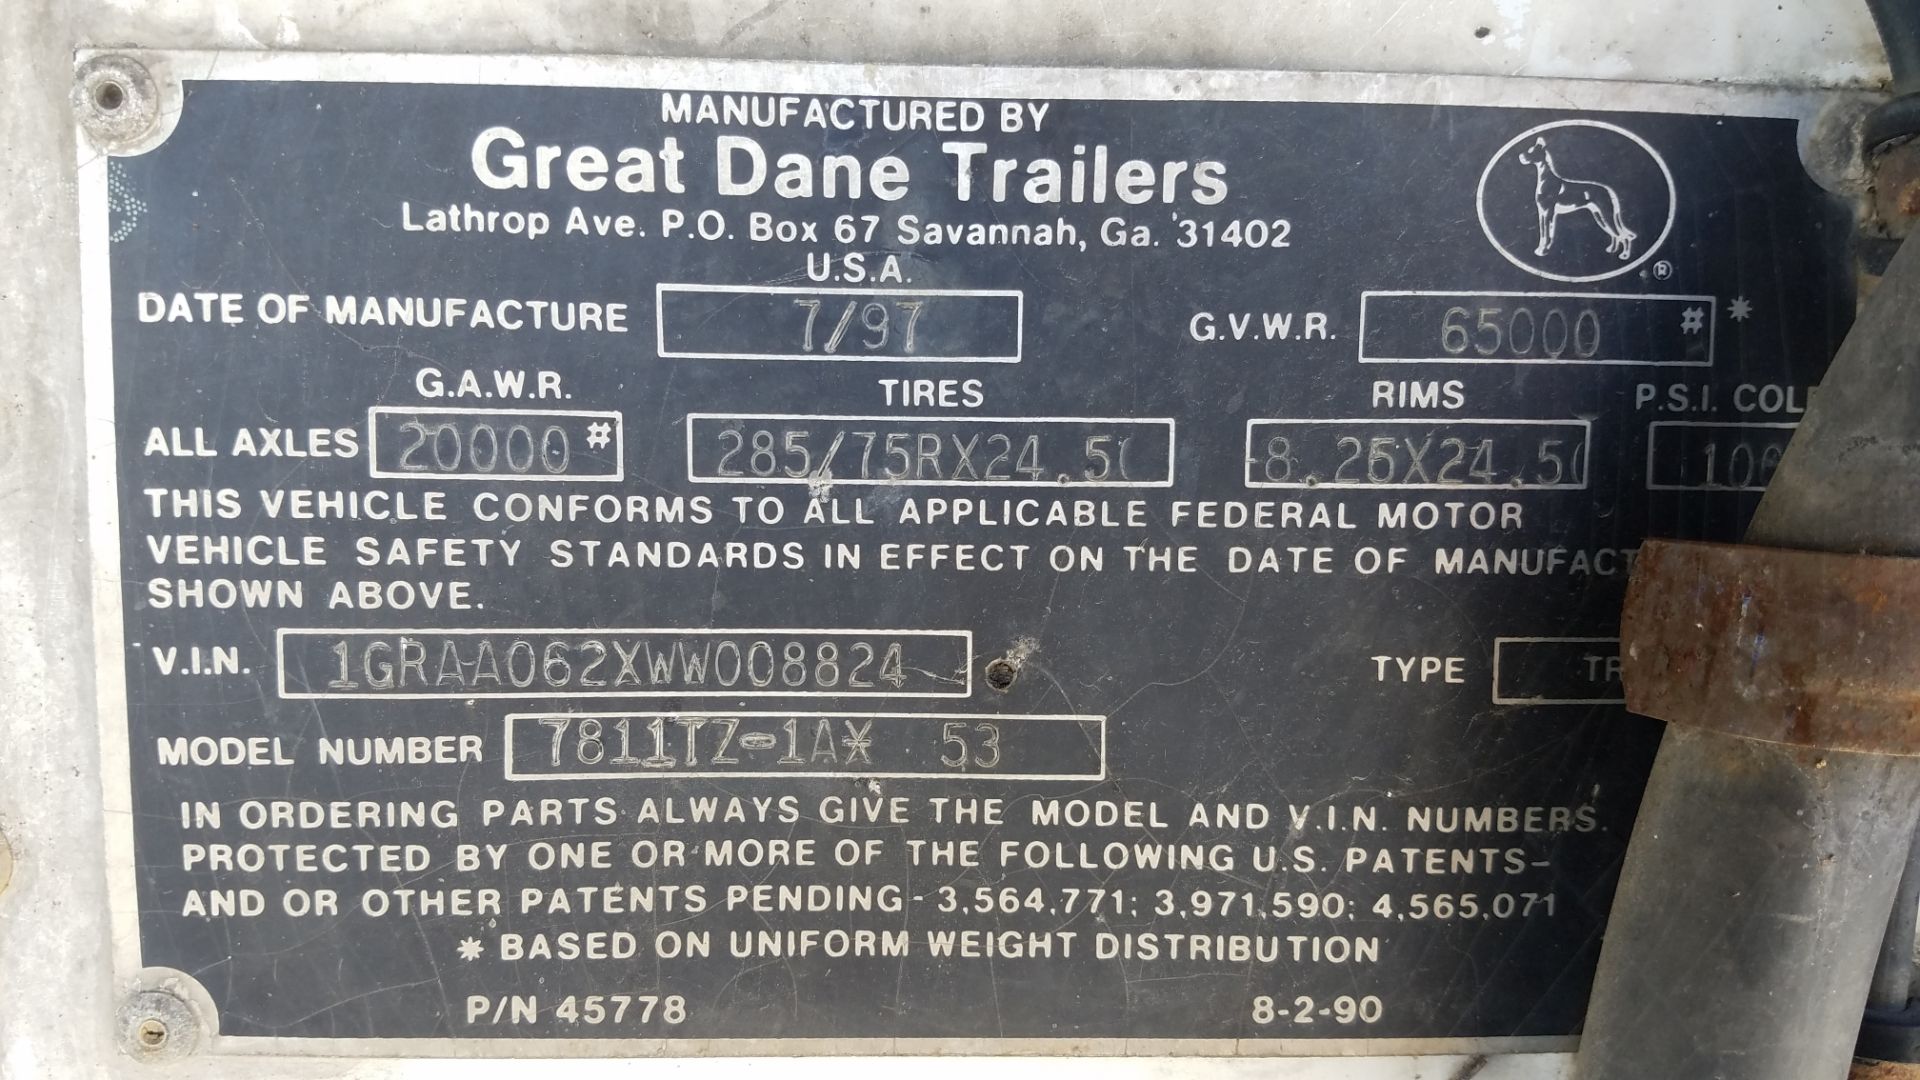 1997 Great Dane Refrigerated Semi Trailer Model 7811 TZ-1A 53, 53’, Carrier Ultrafresh 2 - Image 12 of 15